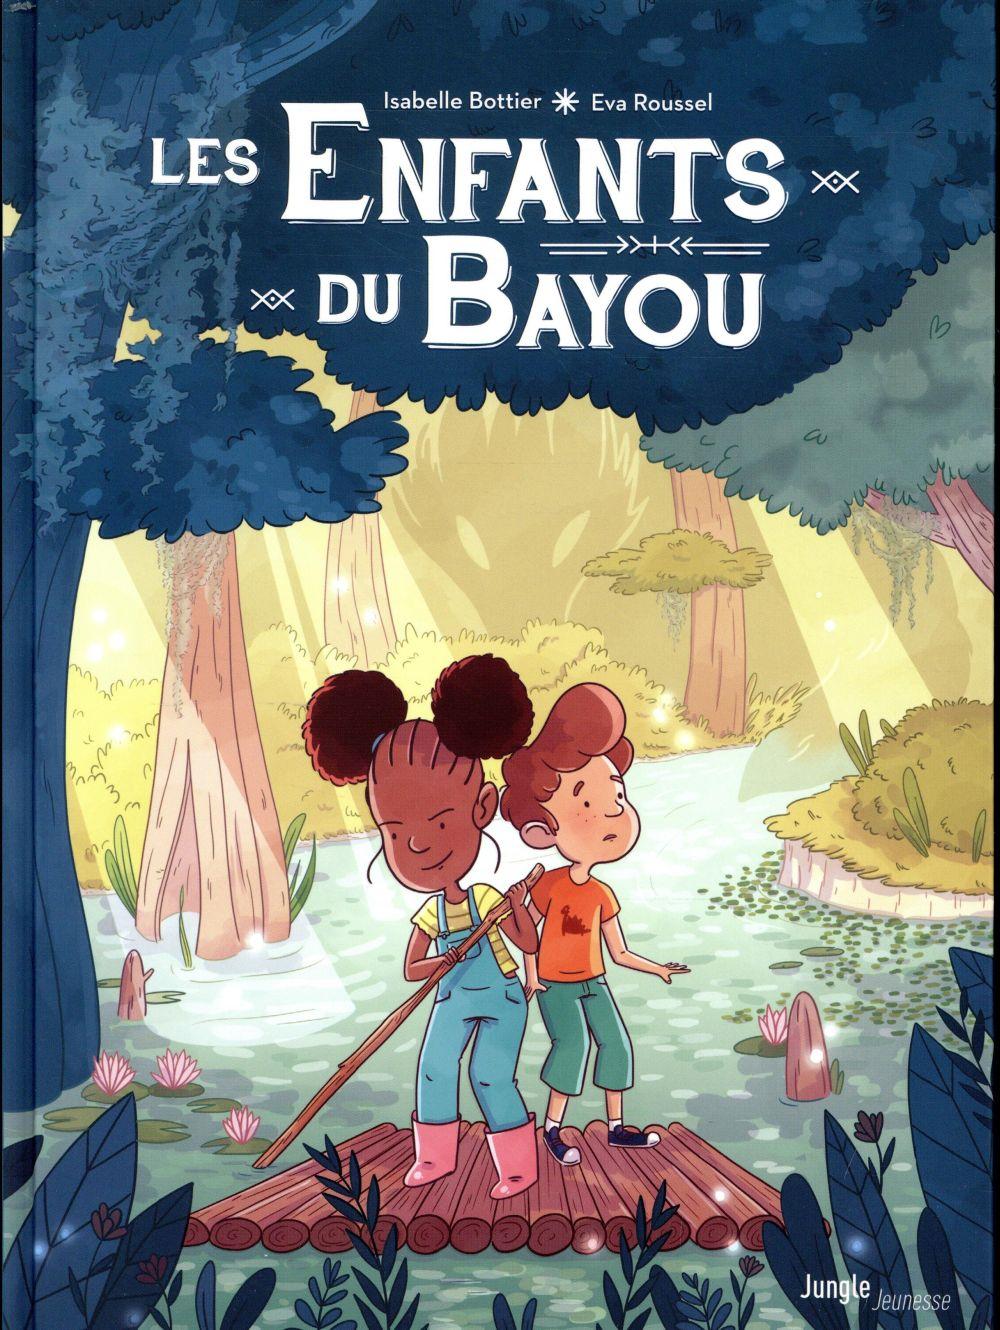 Vente Livre :                                    Les enfants du bayou
- Isabelle Bottier                                     